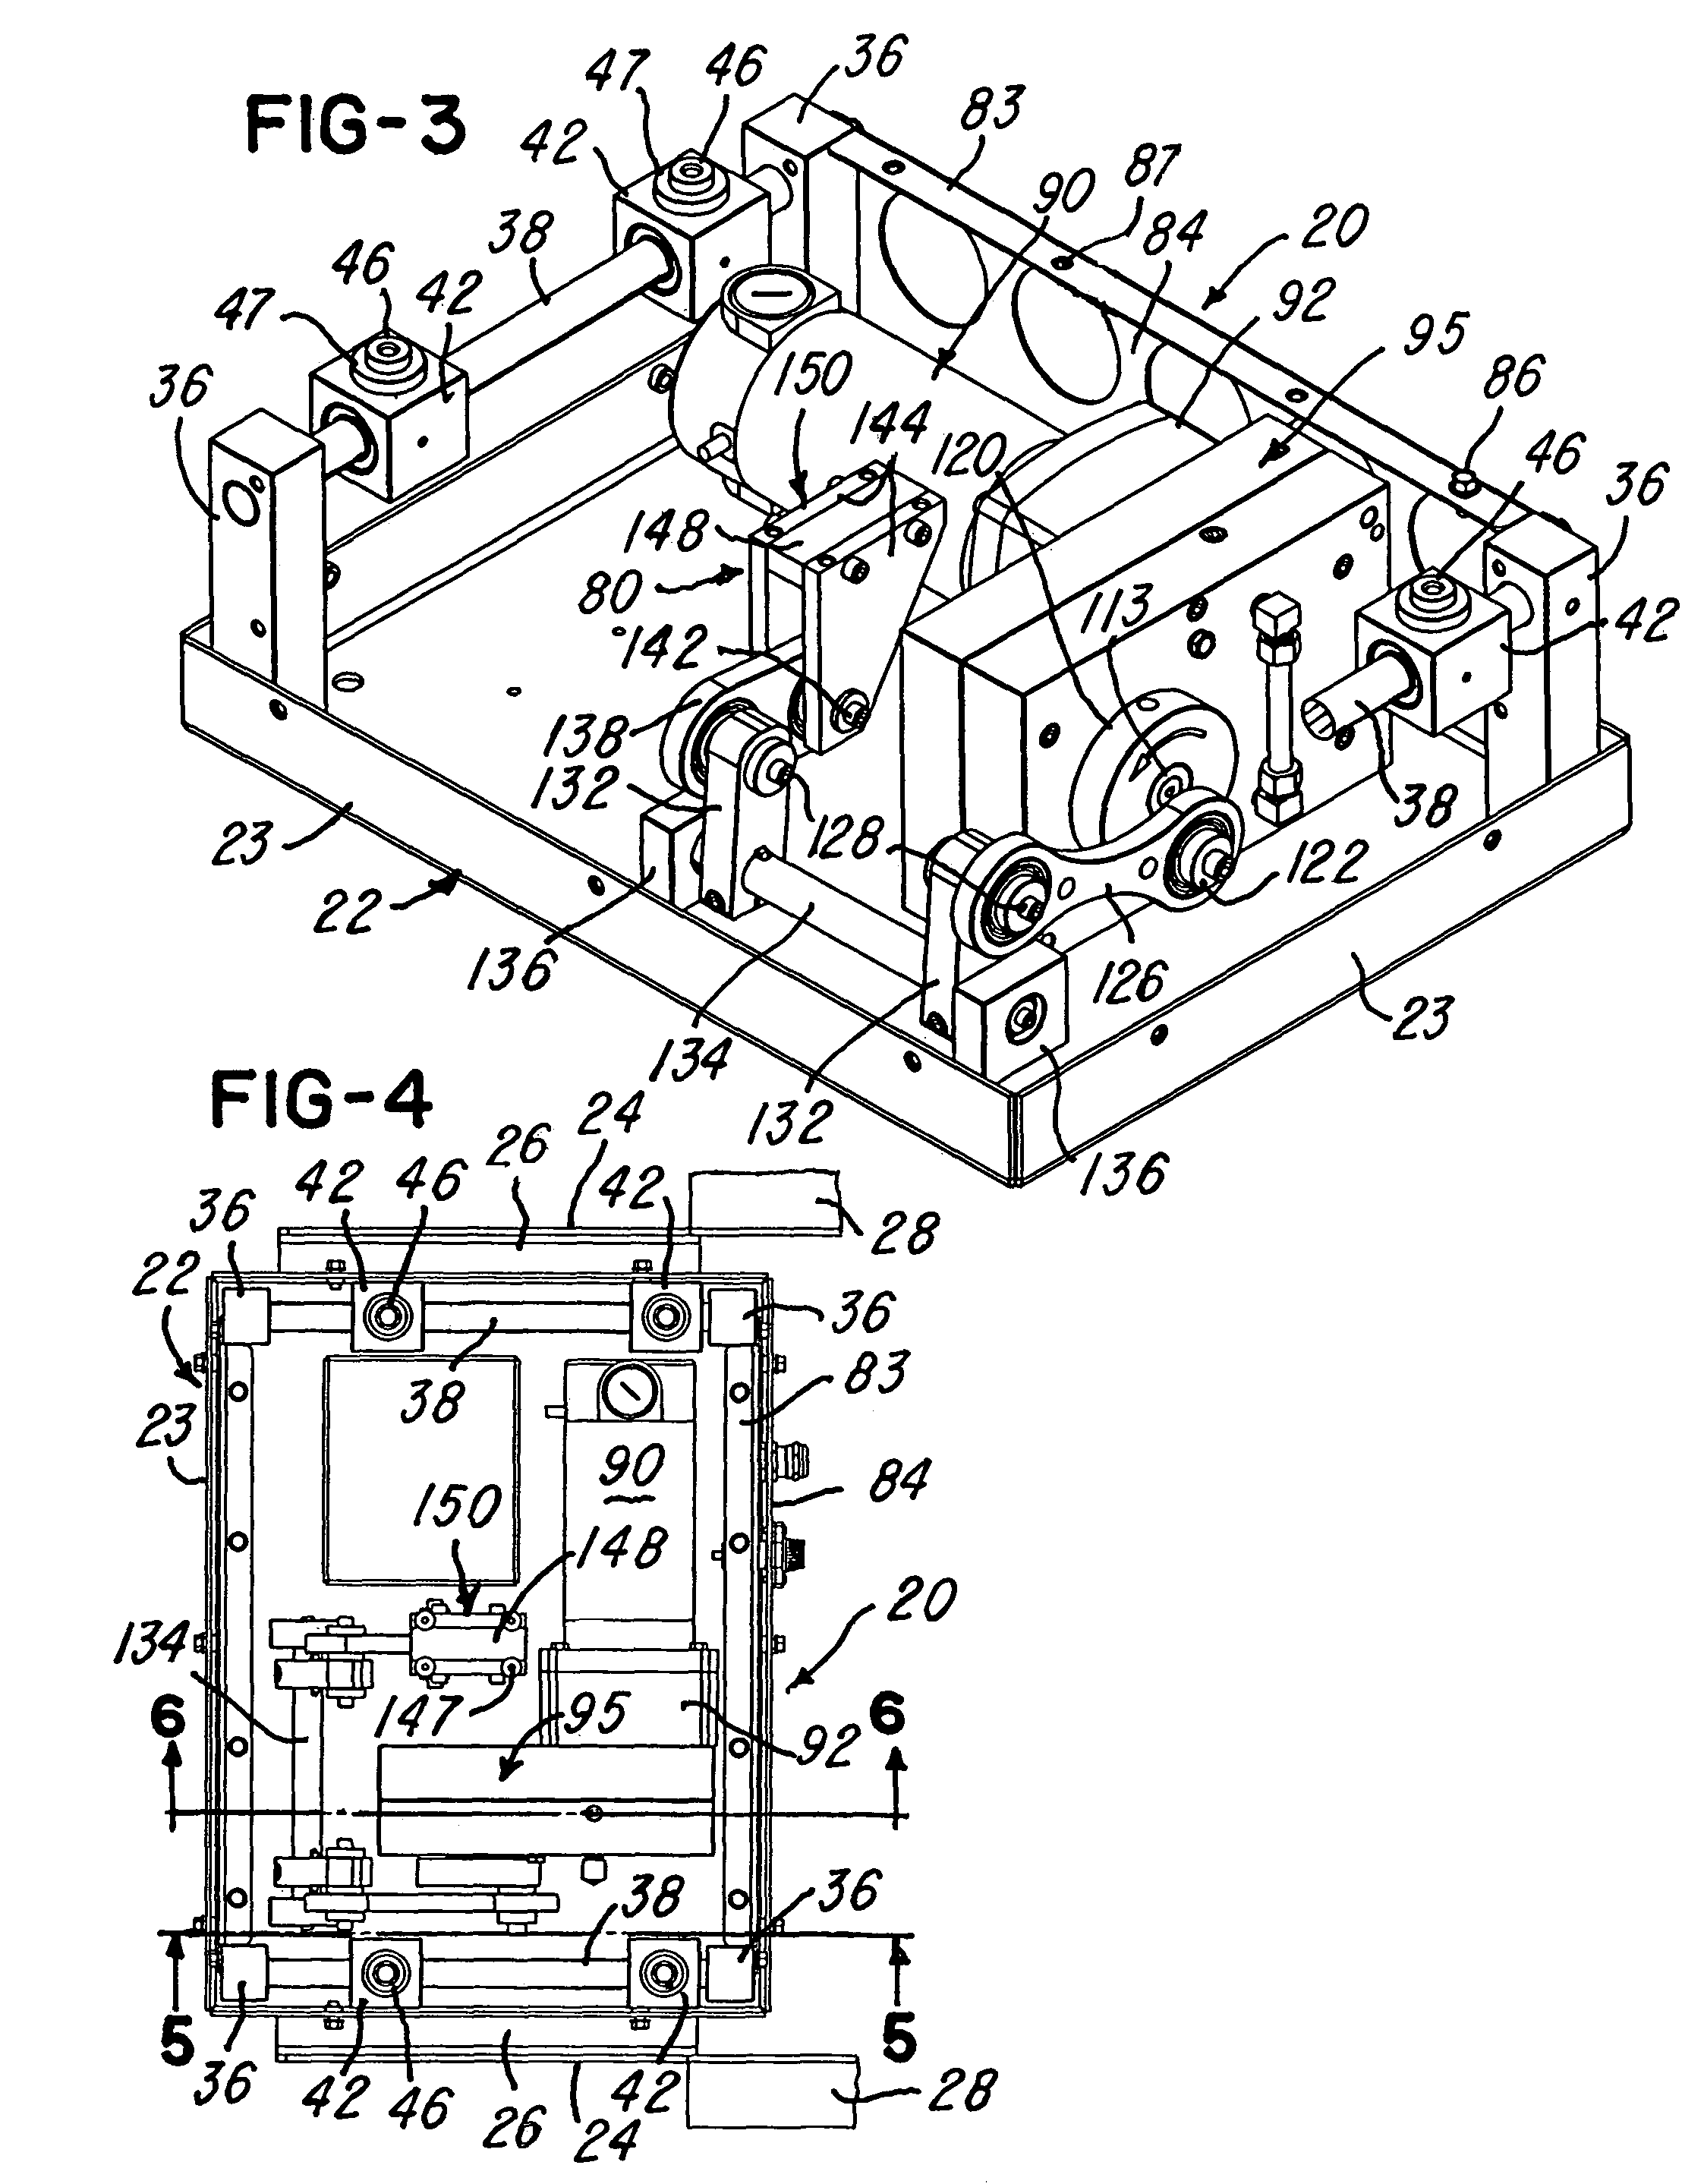 Shaker conveyor with elliptical gear drive system